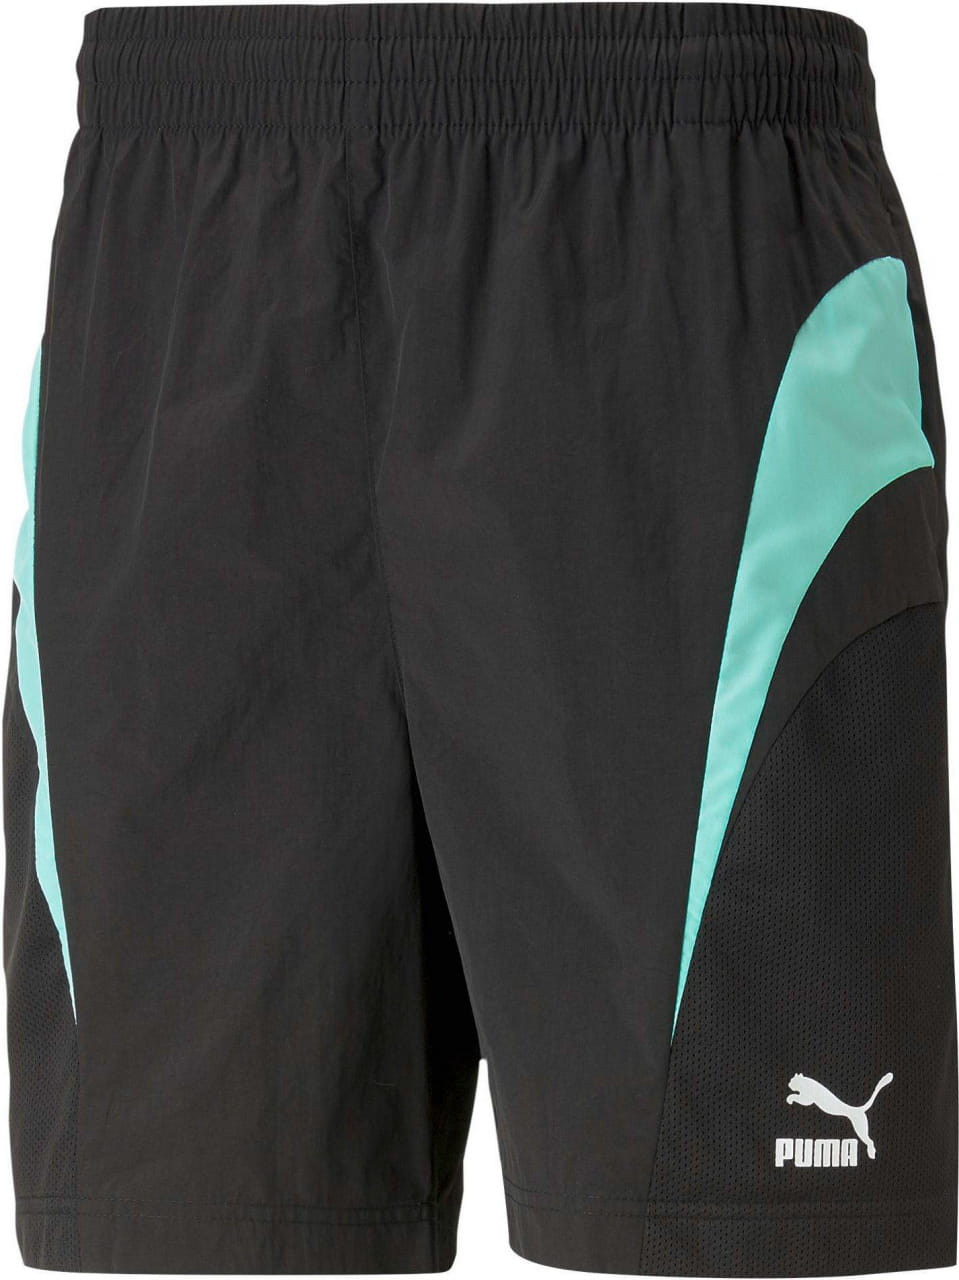 Pantalones cortos de deporte para hombre Puma Swxp Shorts